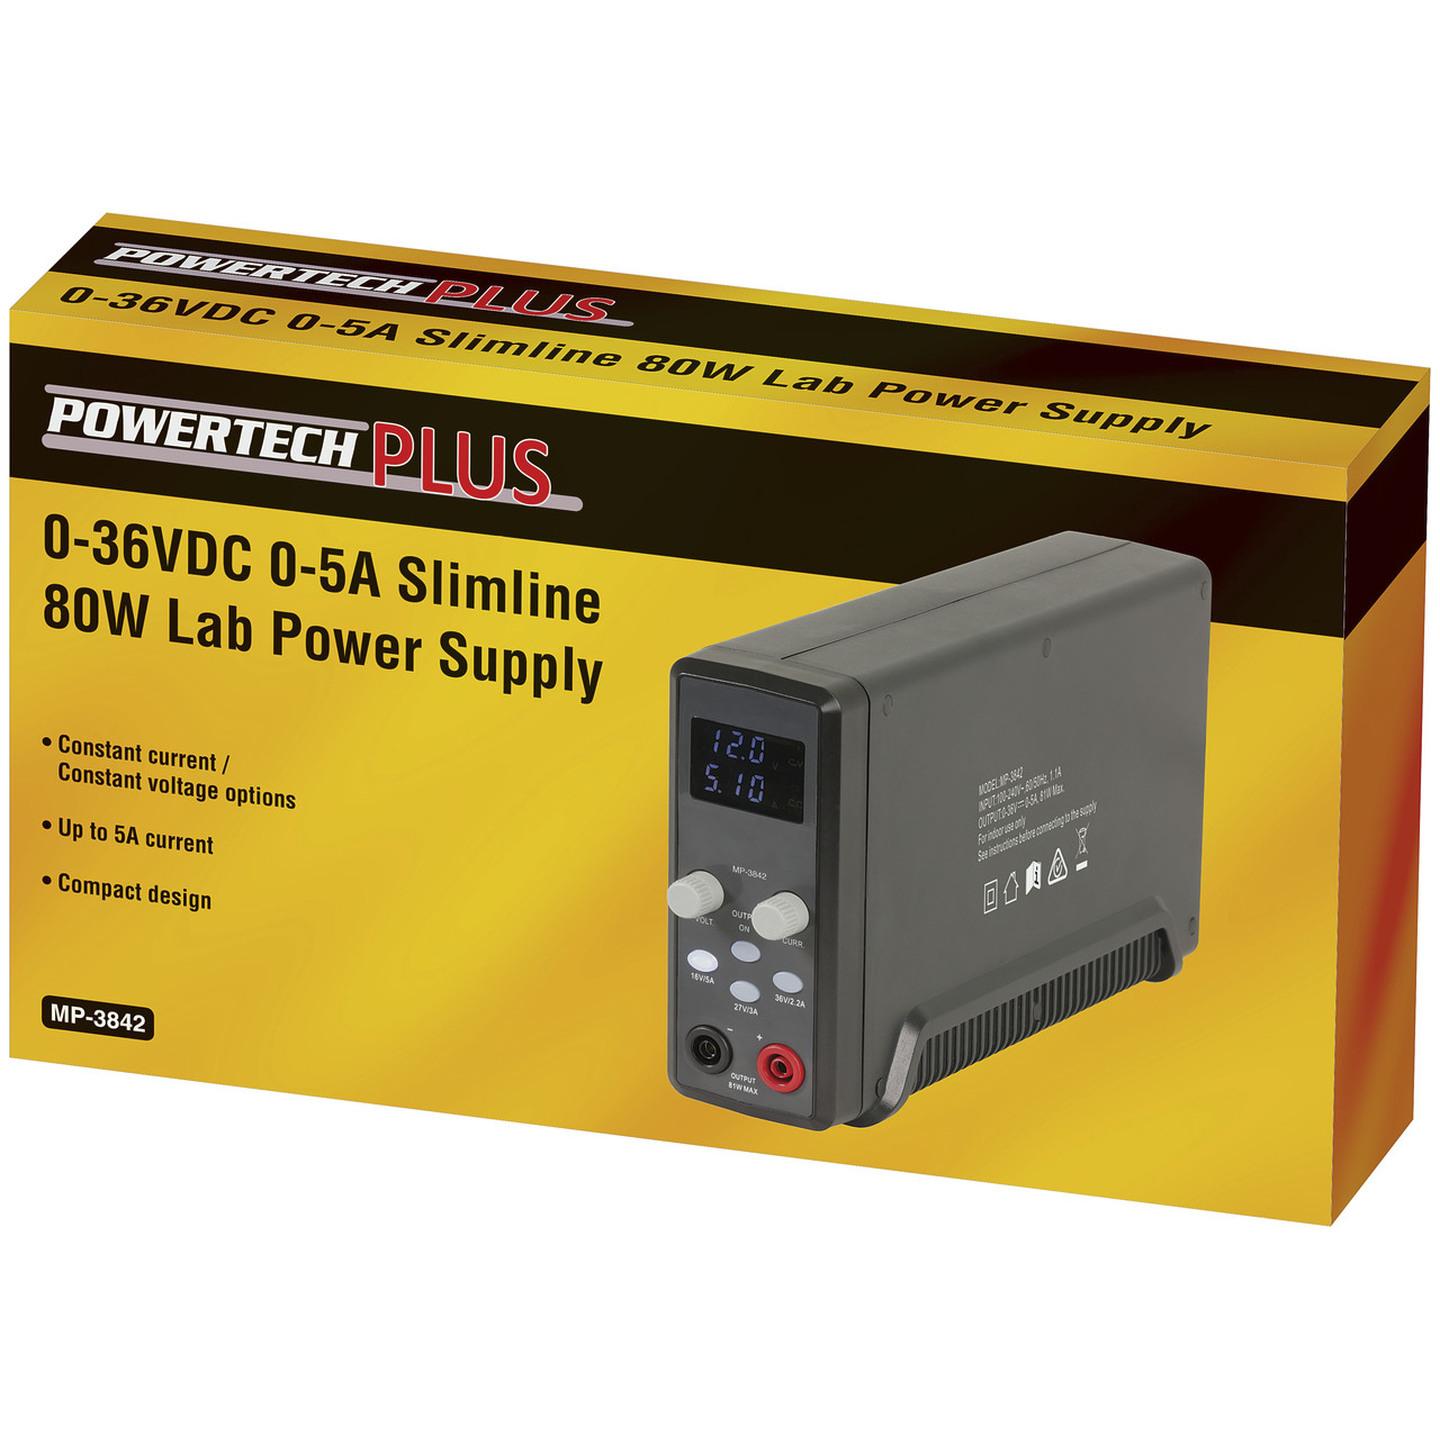 0-36VDC 0-5A Slimline 80W Lab Power Supply